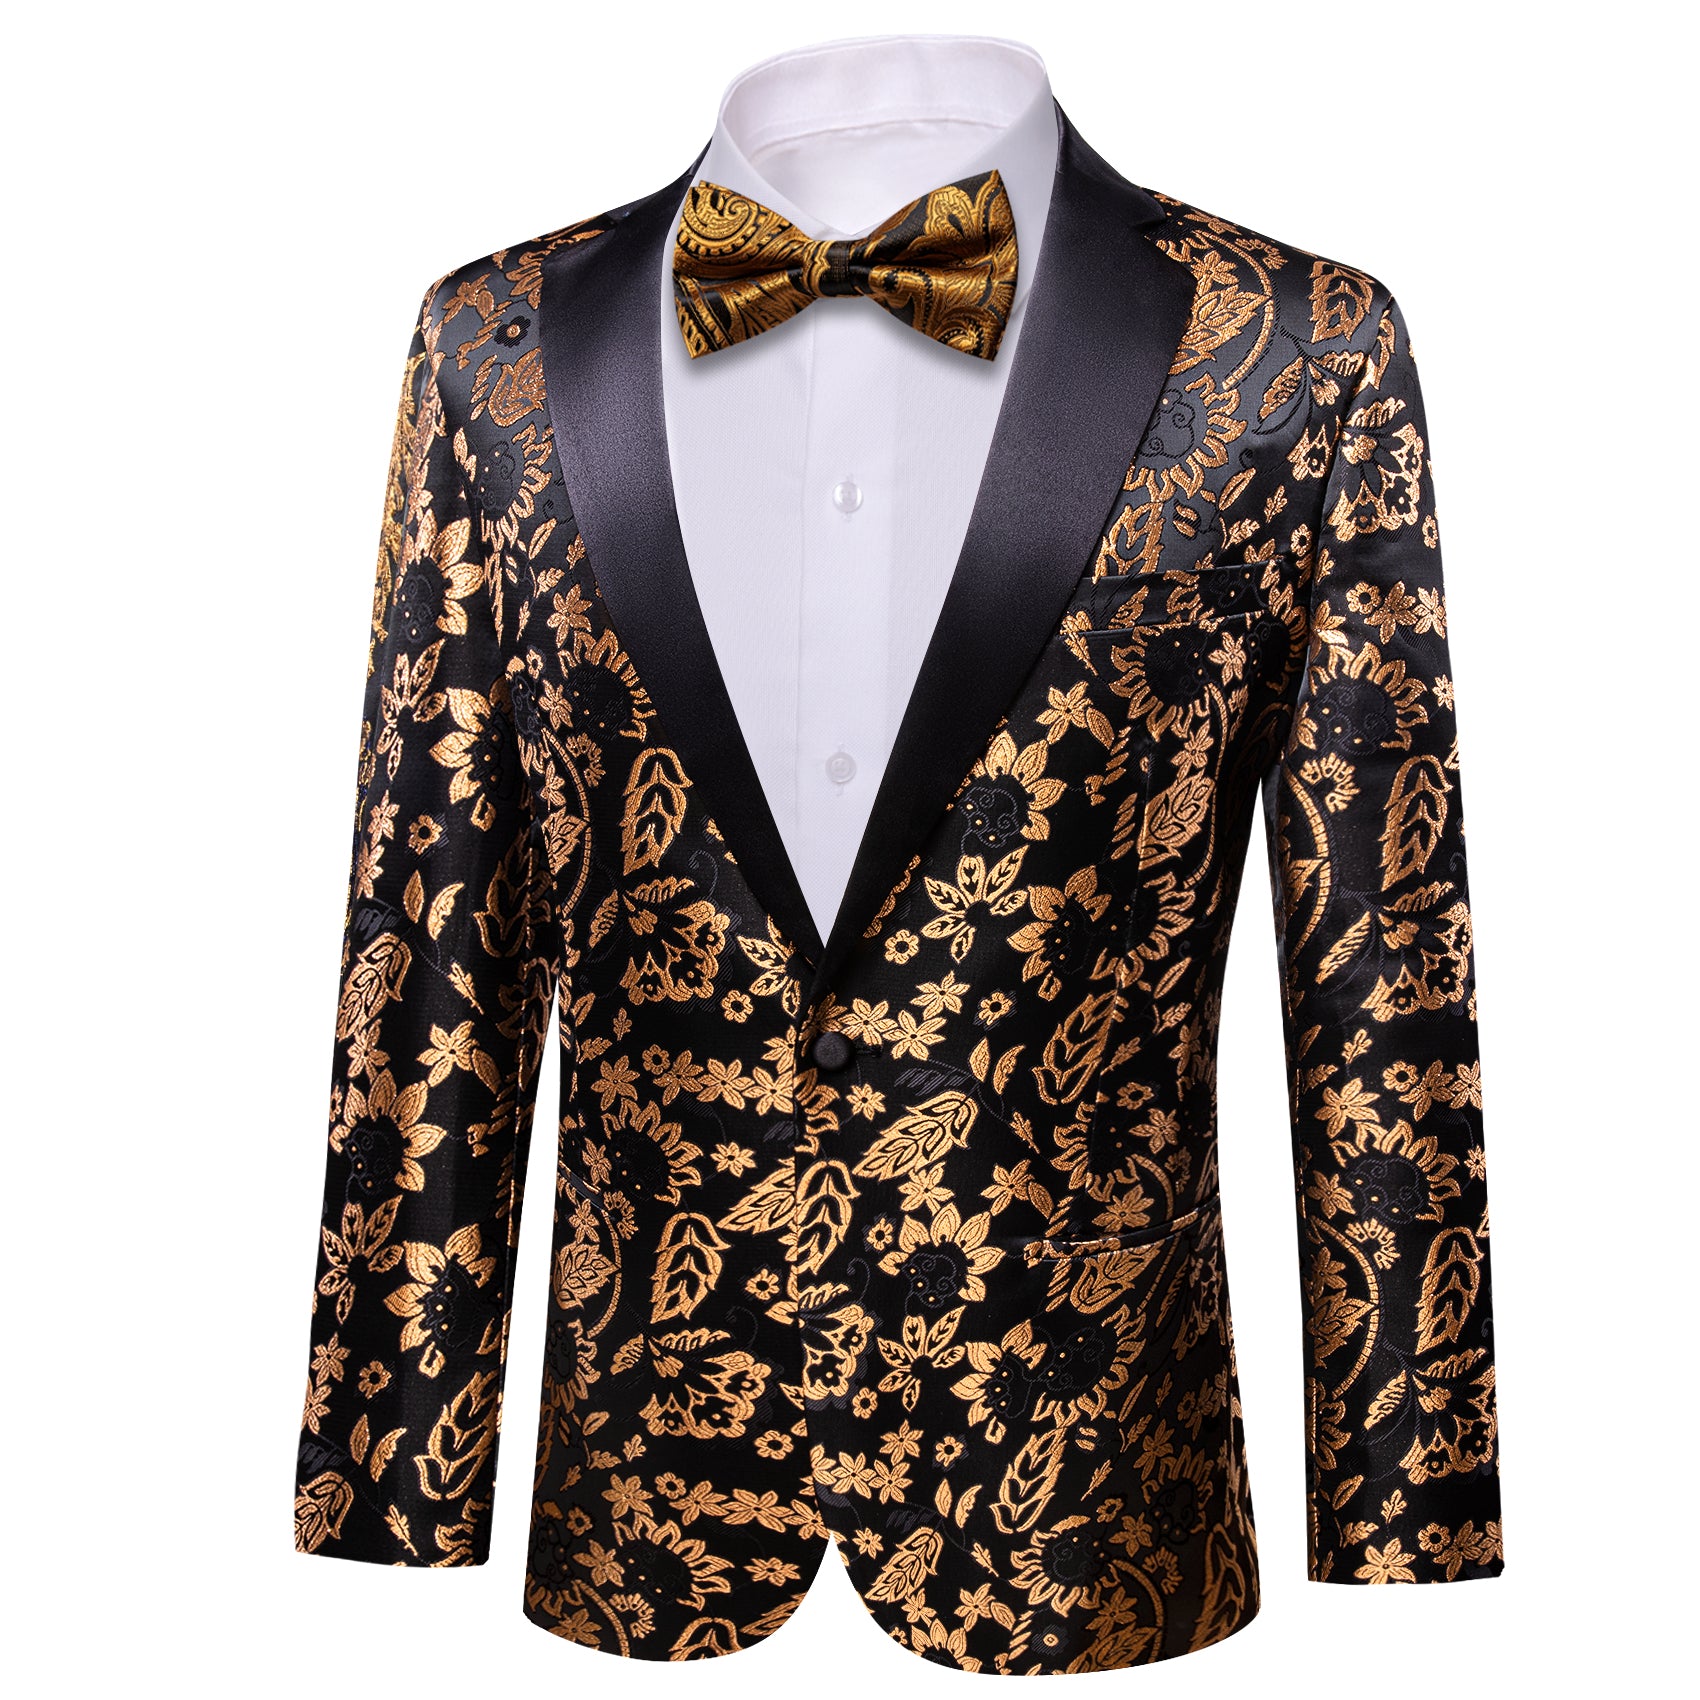 Men's Dress Black Gold Floral Suit Jacket Slim One Button Stylish Blazer